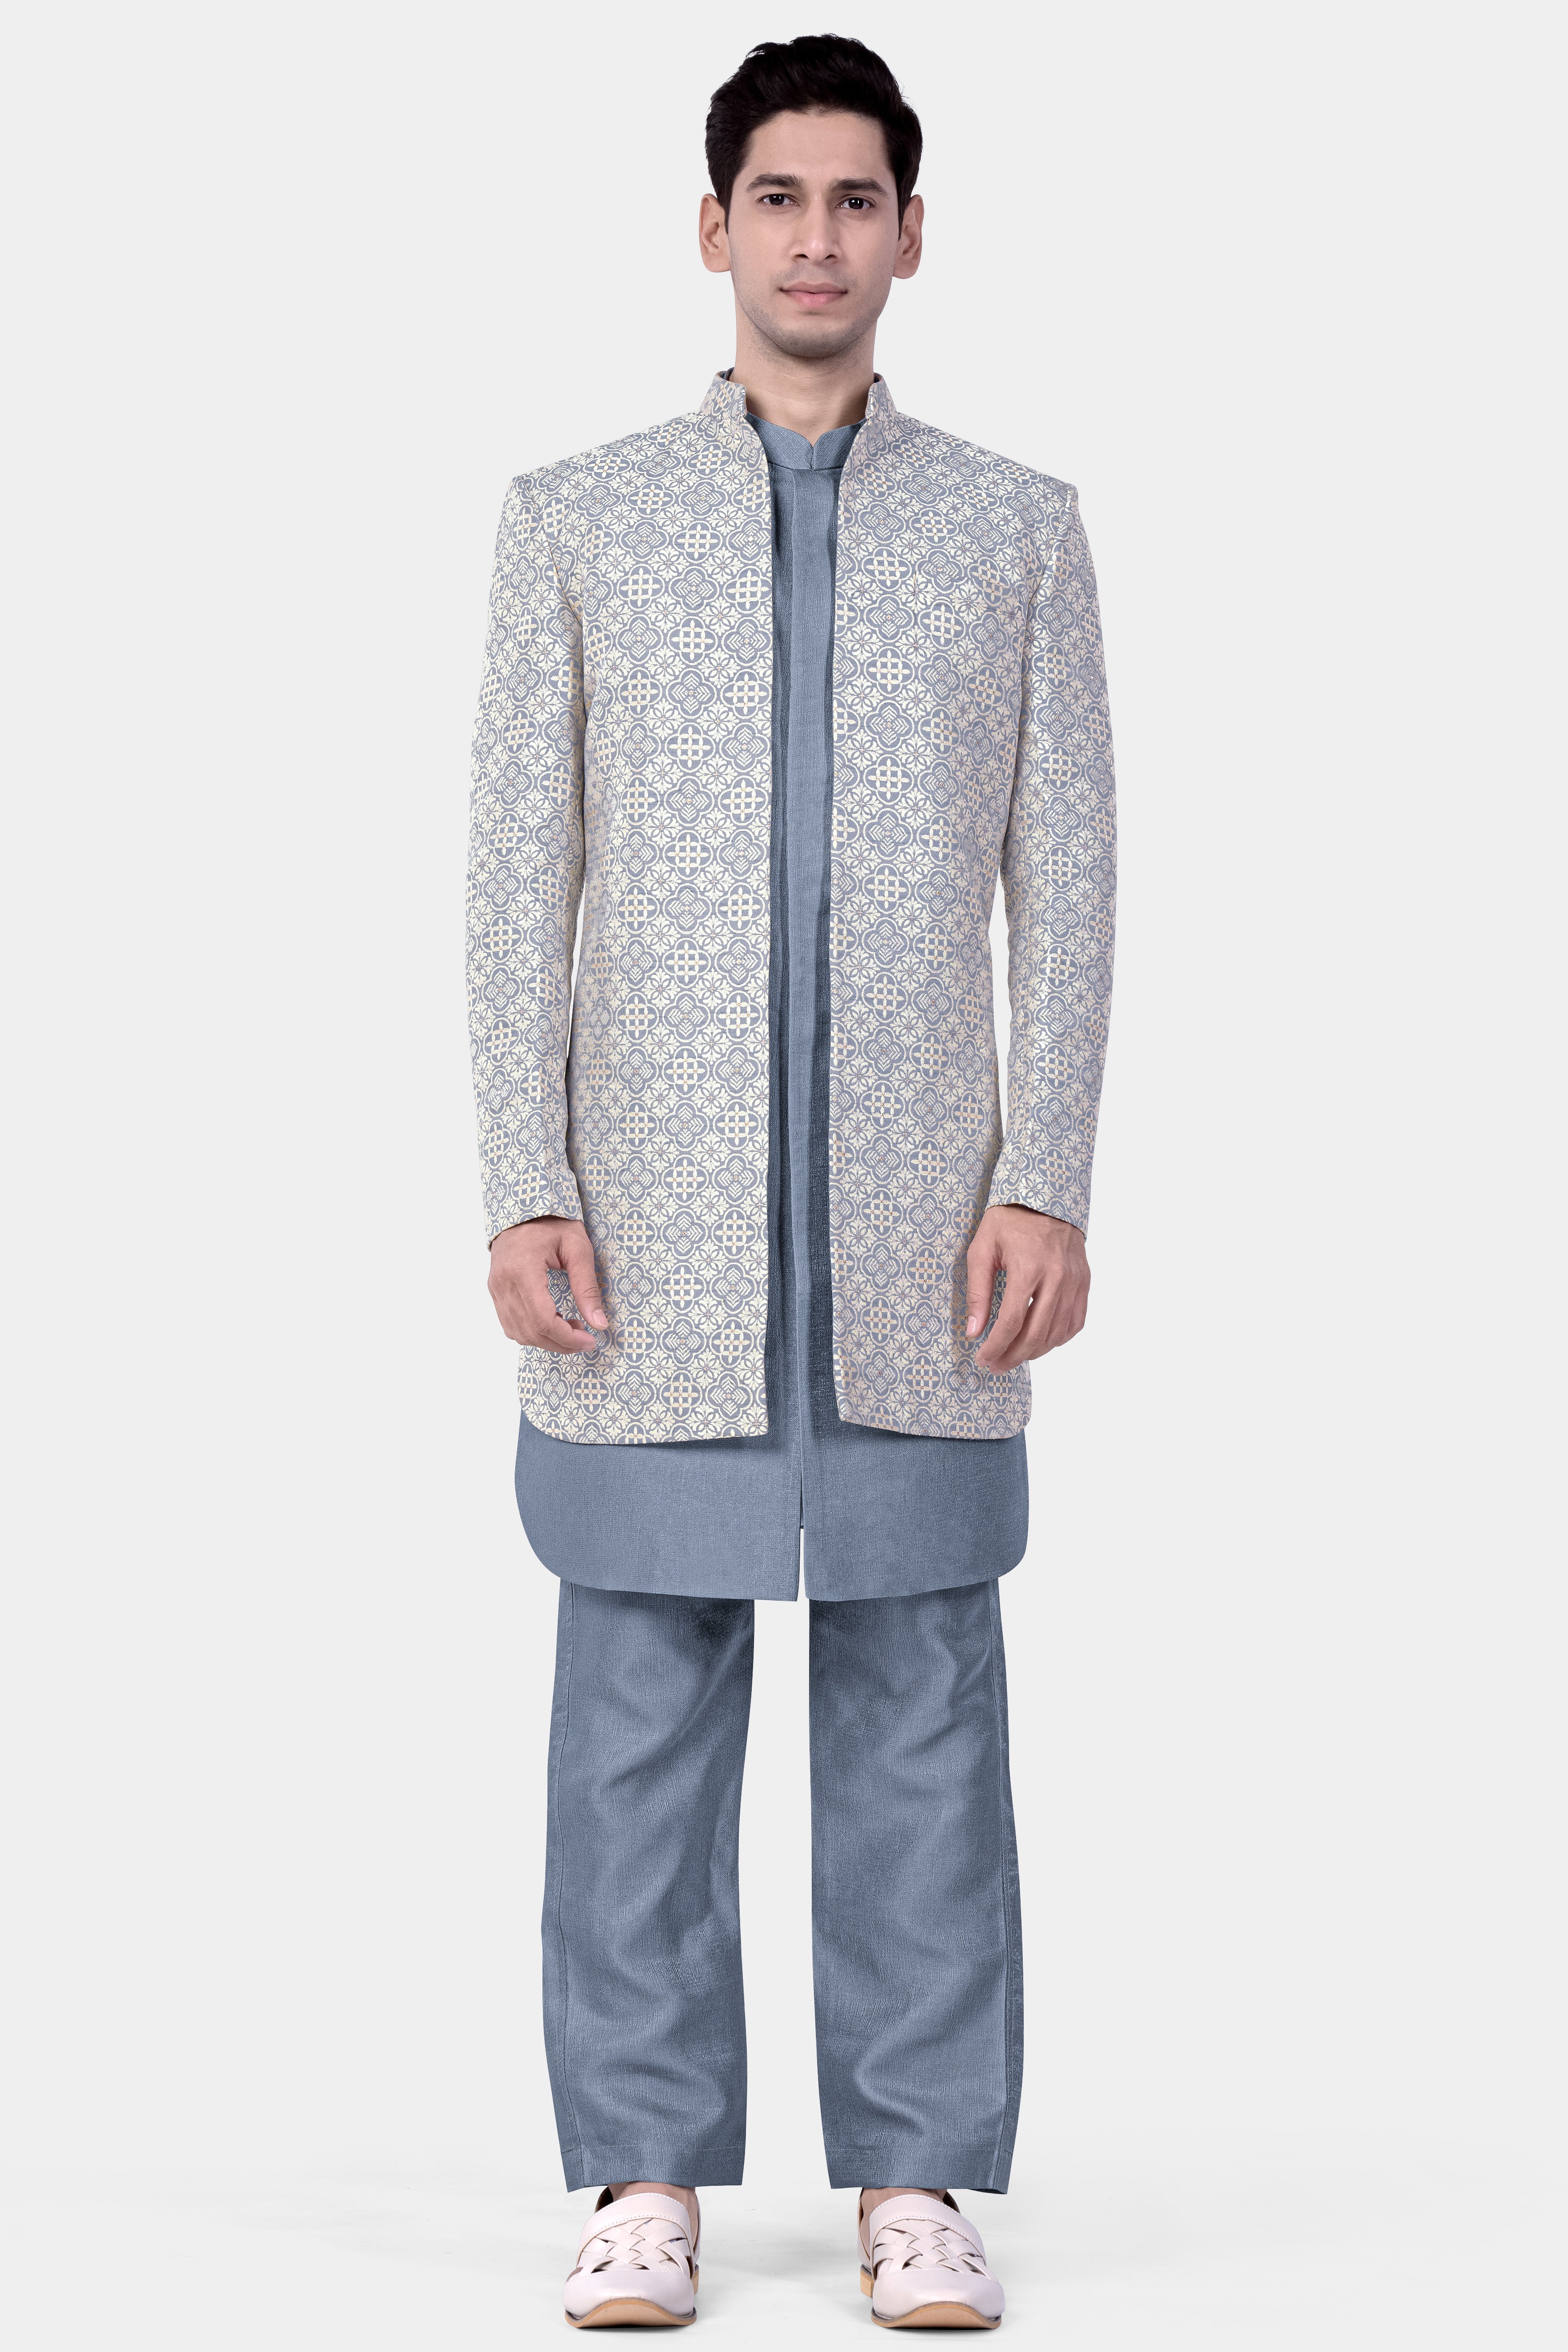 Cadet Blue and White Moroccan Jacquard Textured Designer Indo-Western Set